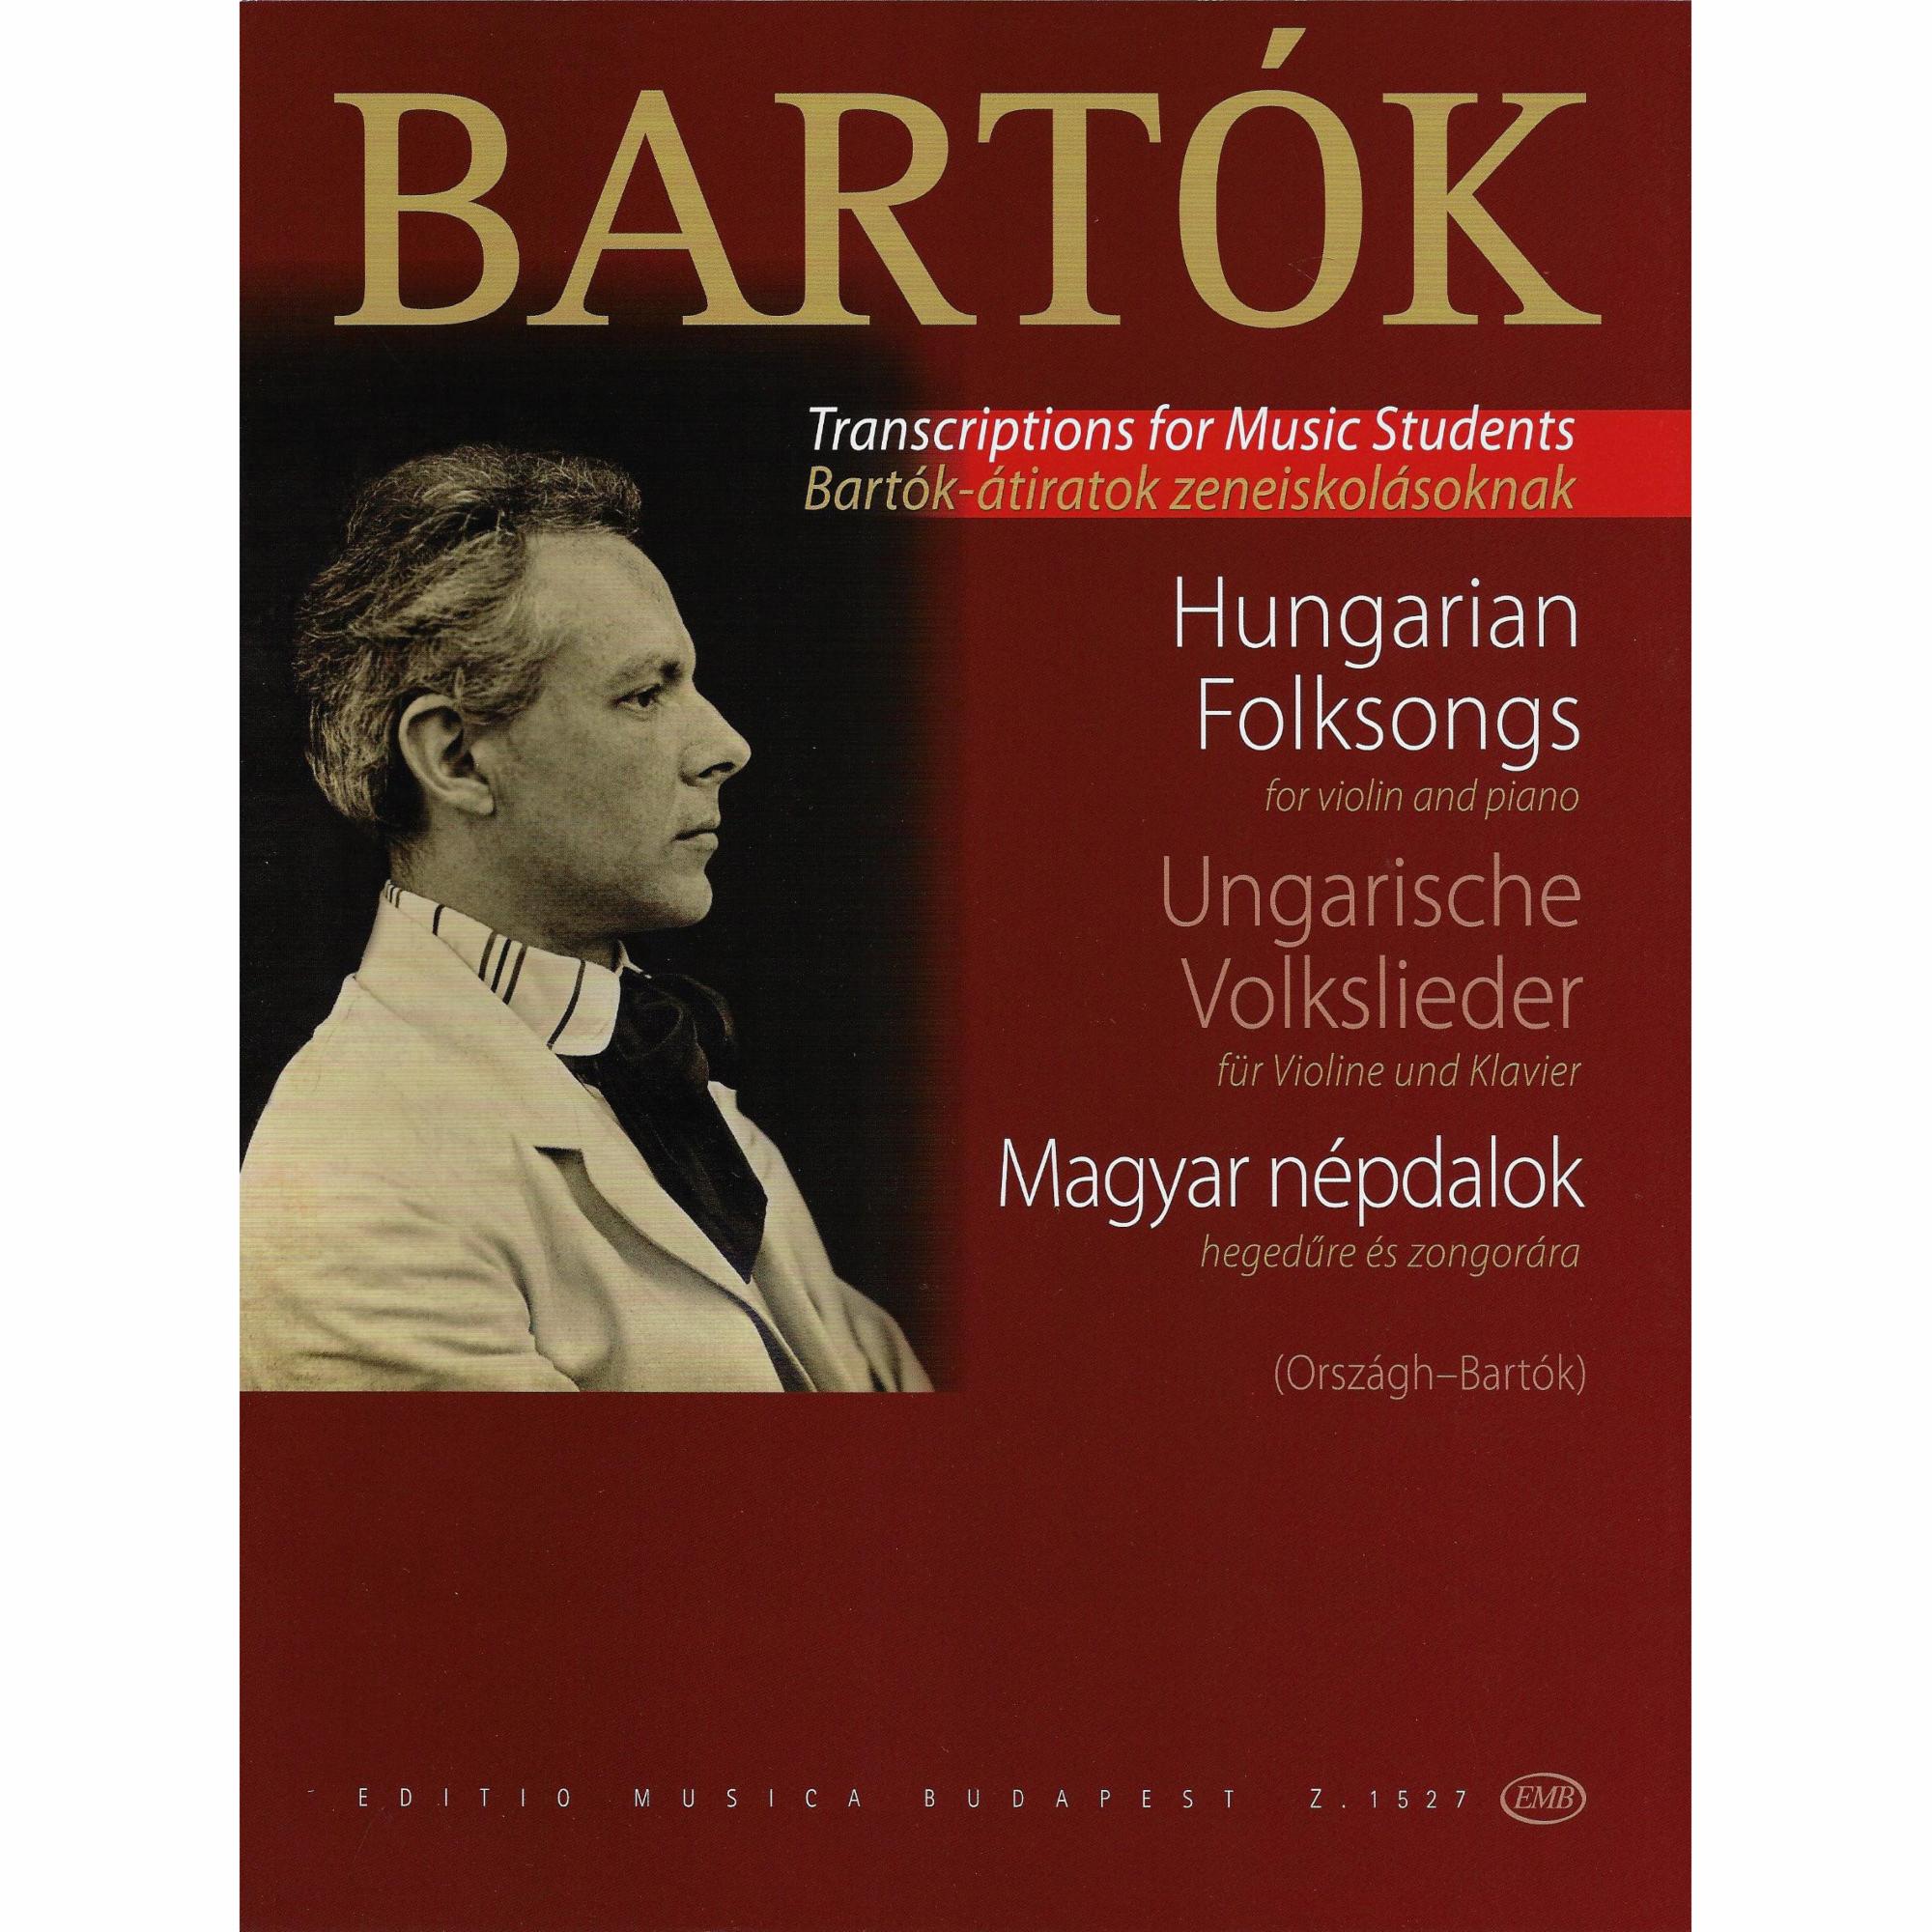 Bartok -- Hungarian Folksongs for Violin and Piano